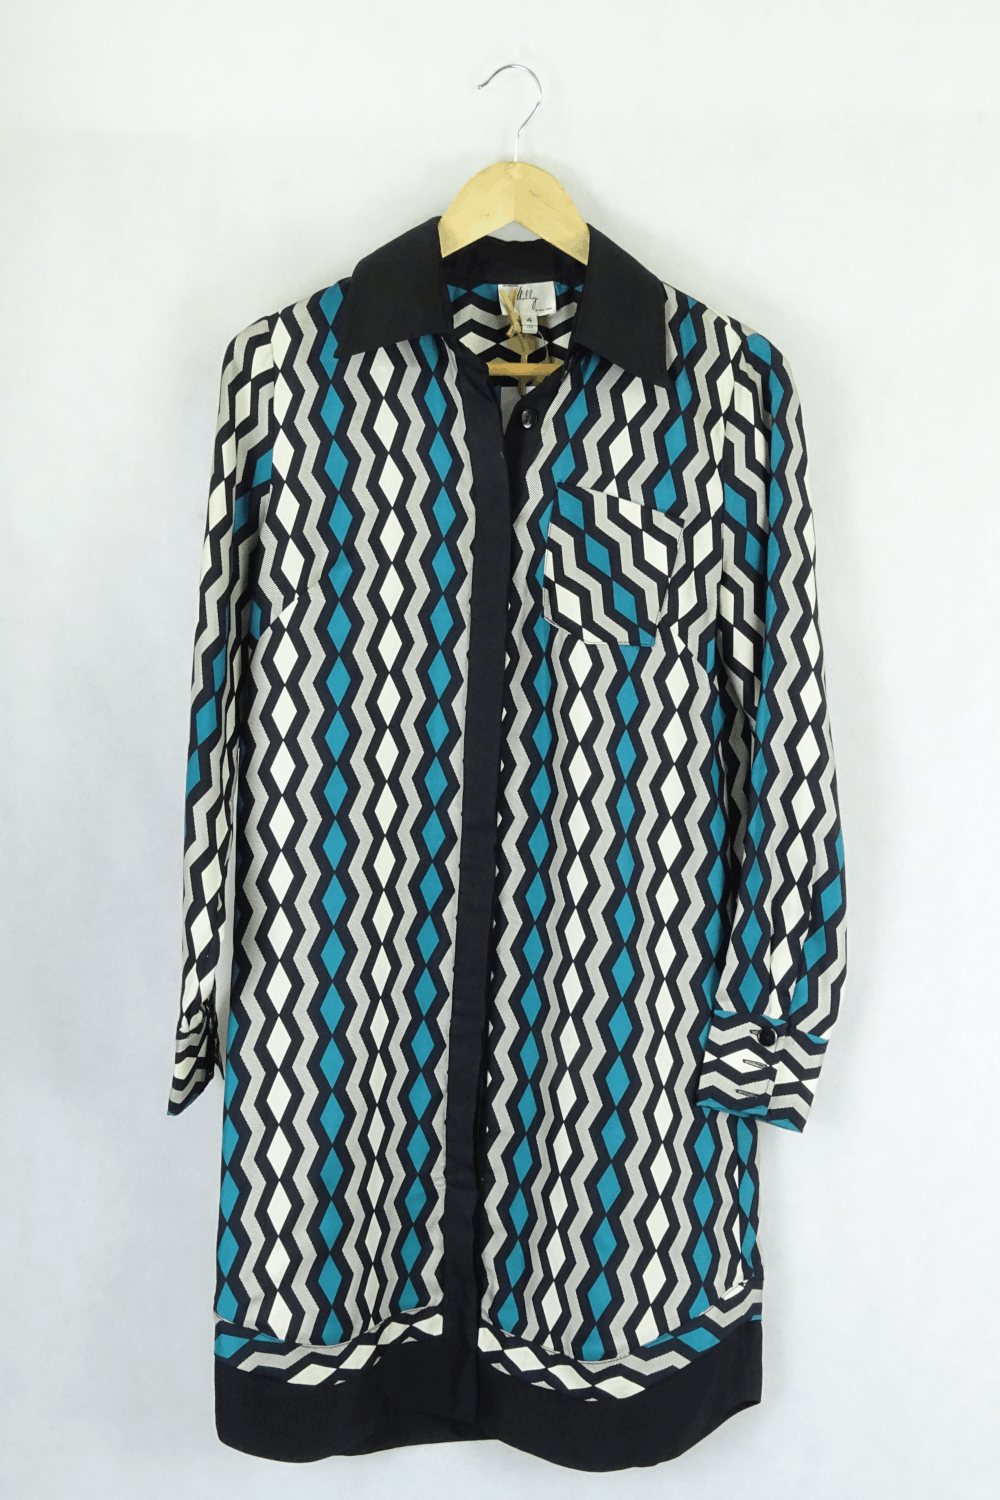 Milly Blue And Black Geometric Print Dress 4 (Au 8)